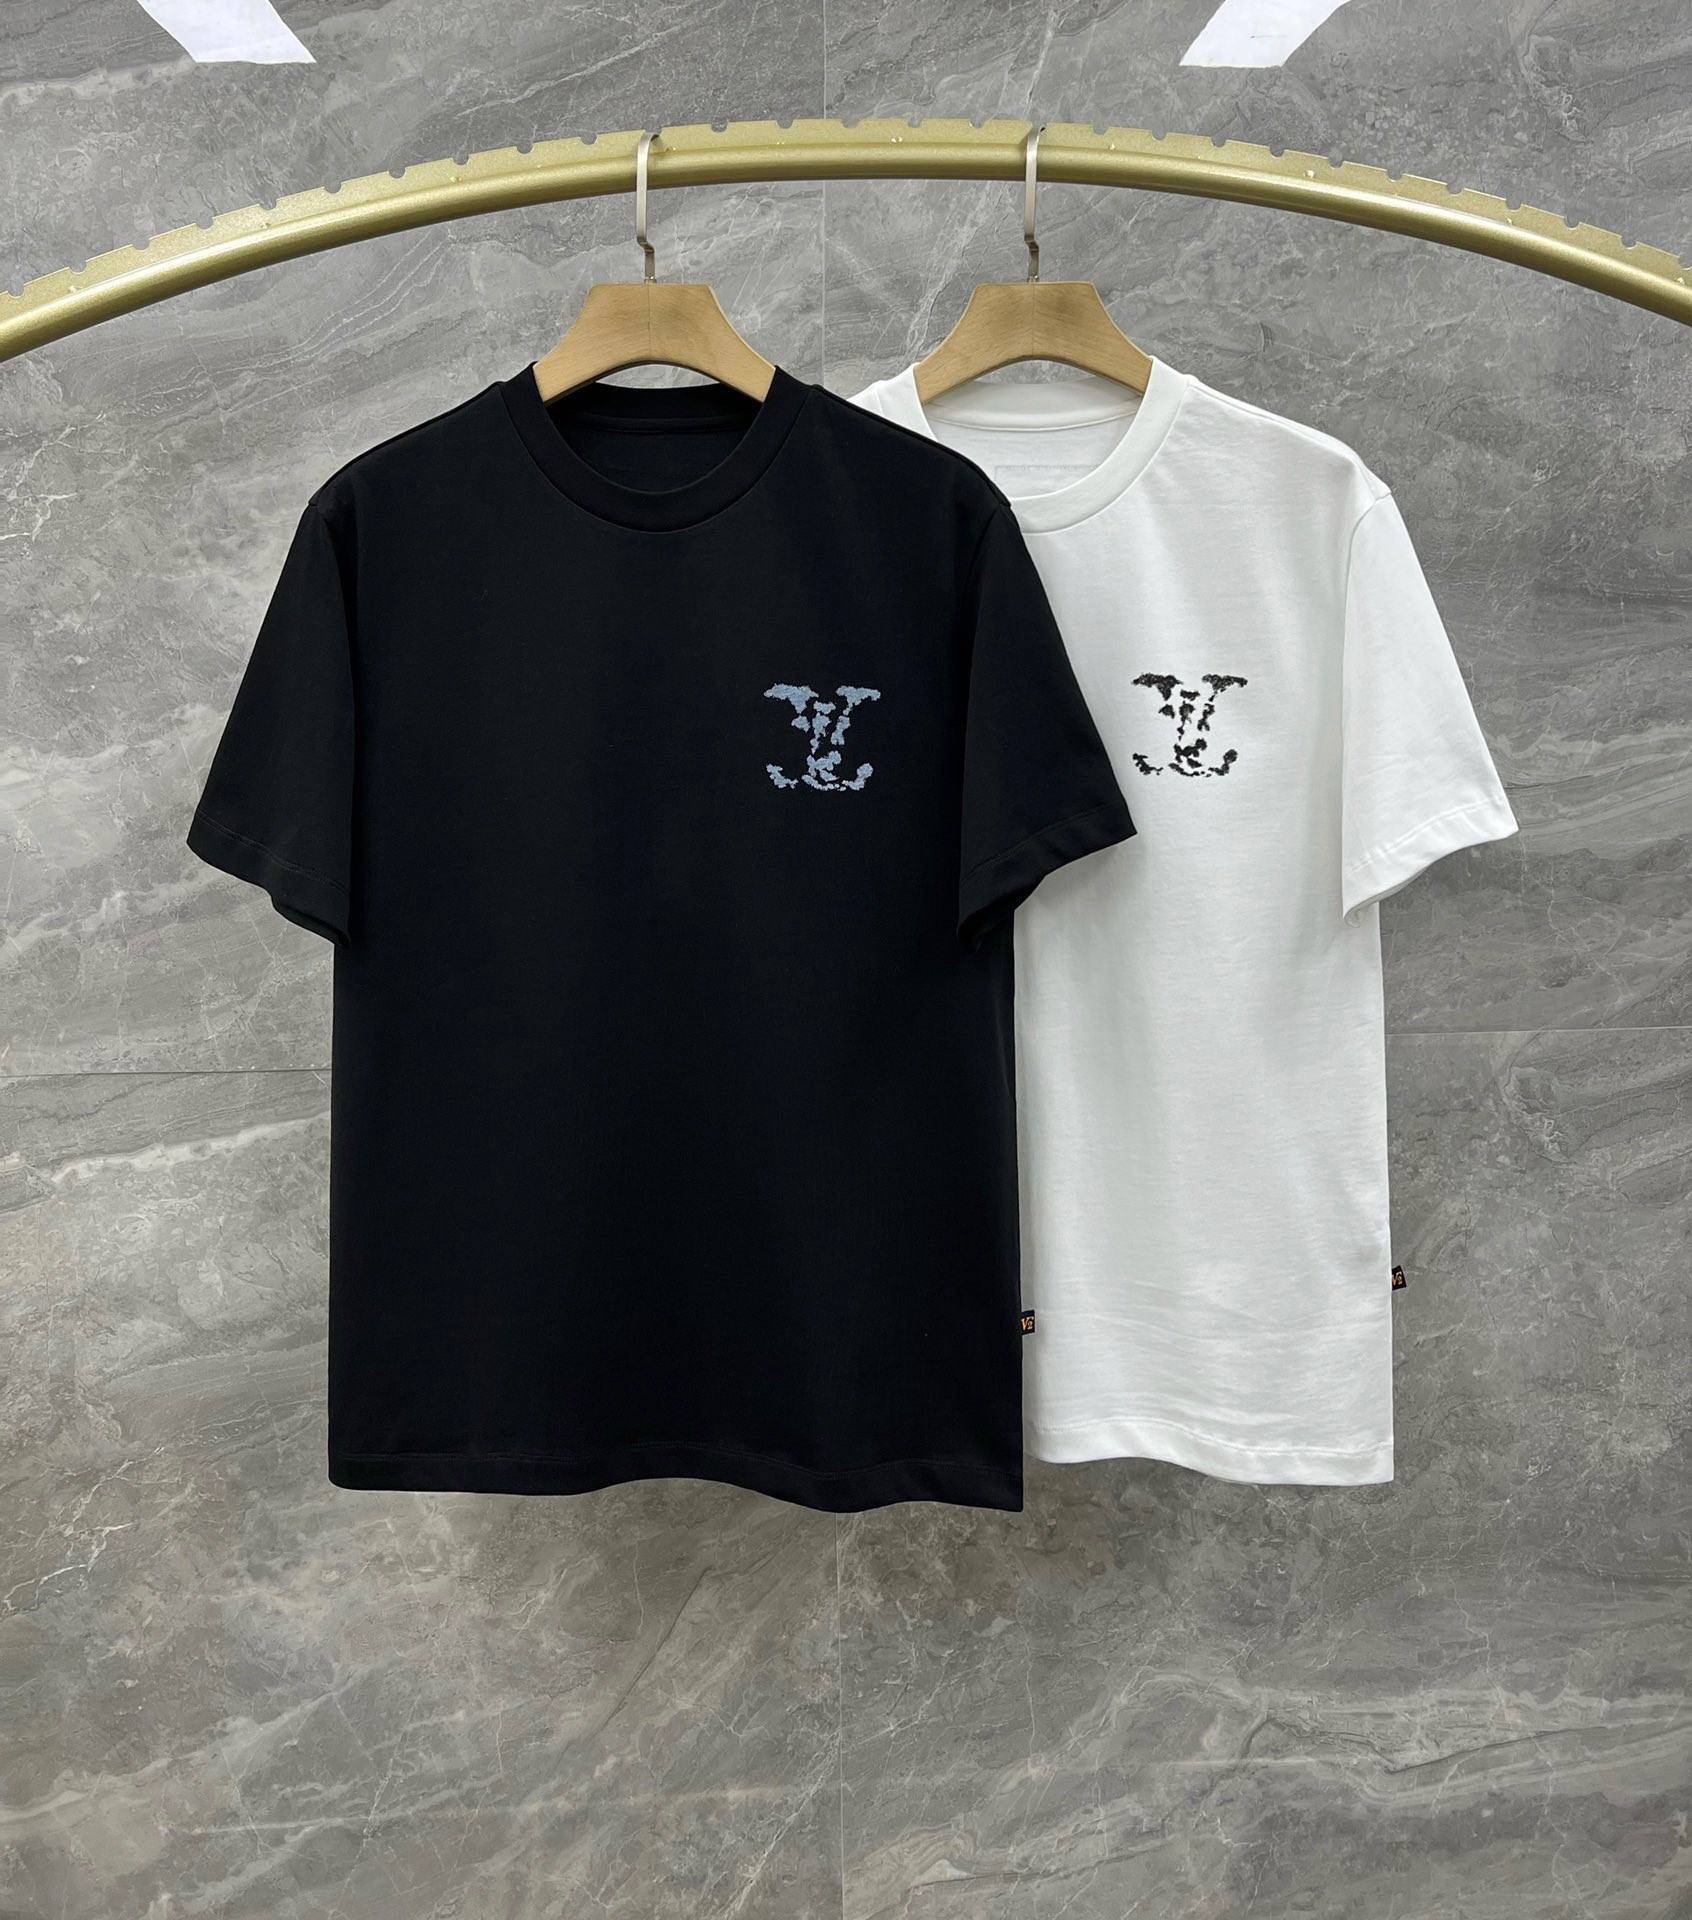 Louis Vuitton Clothing T-Shirt Black White Embroidery Unisex Cotton Fashion Short Sleeve